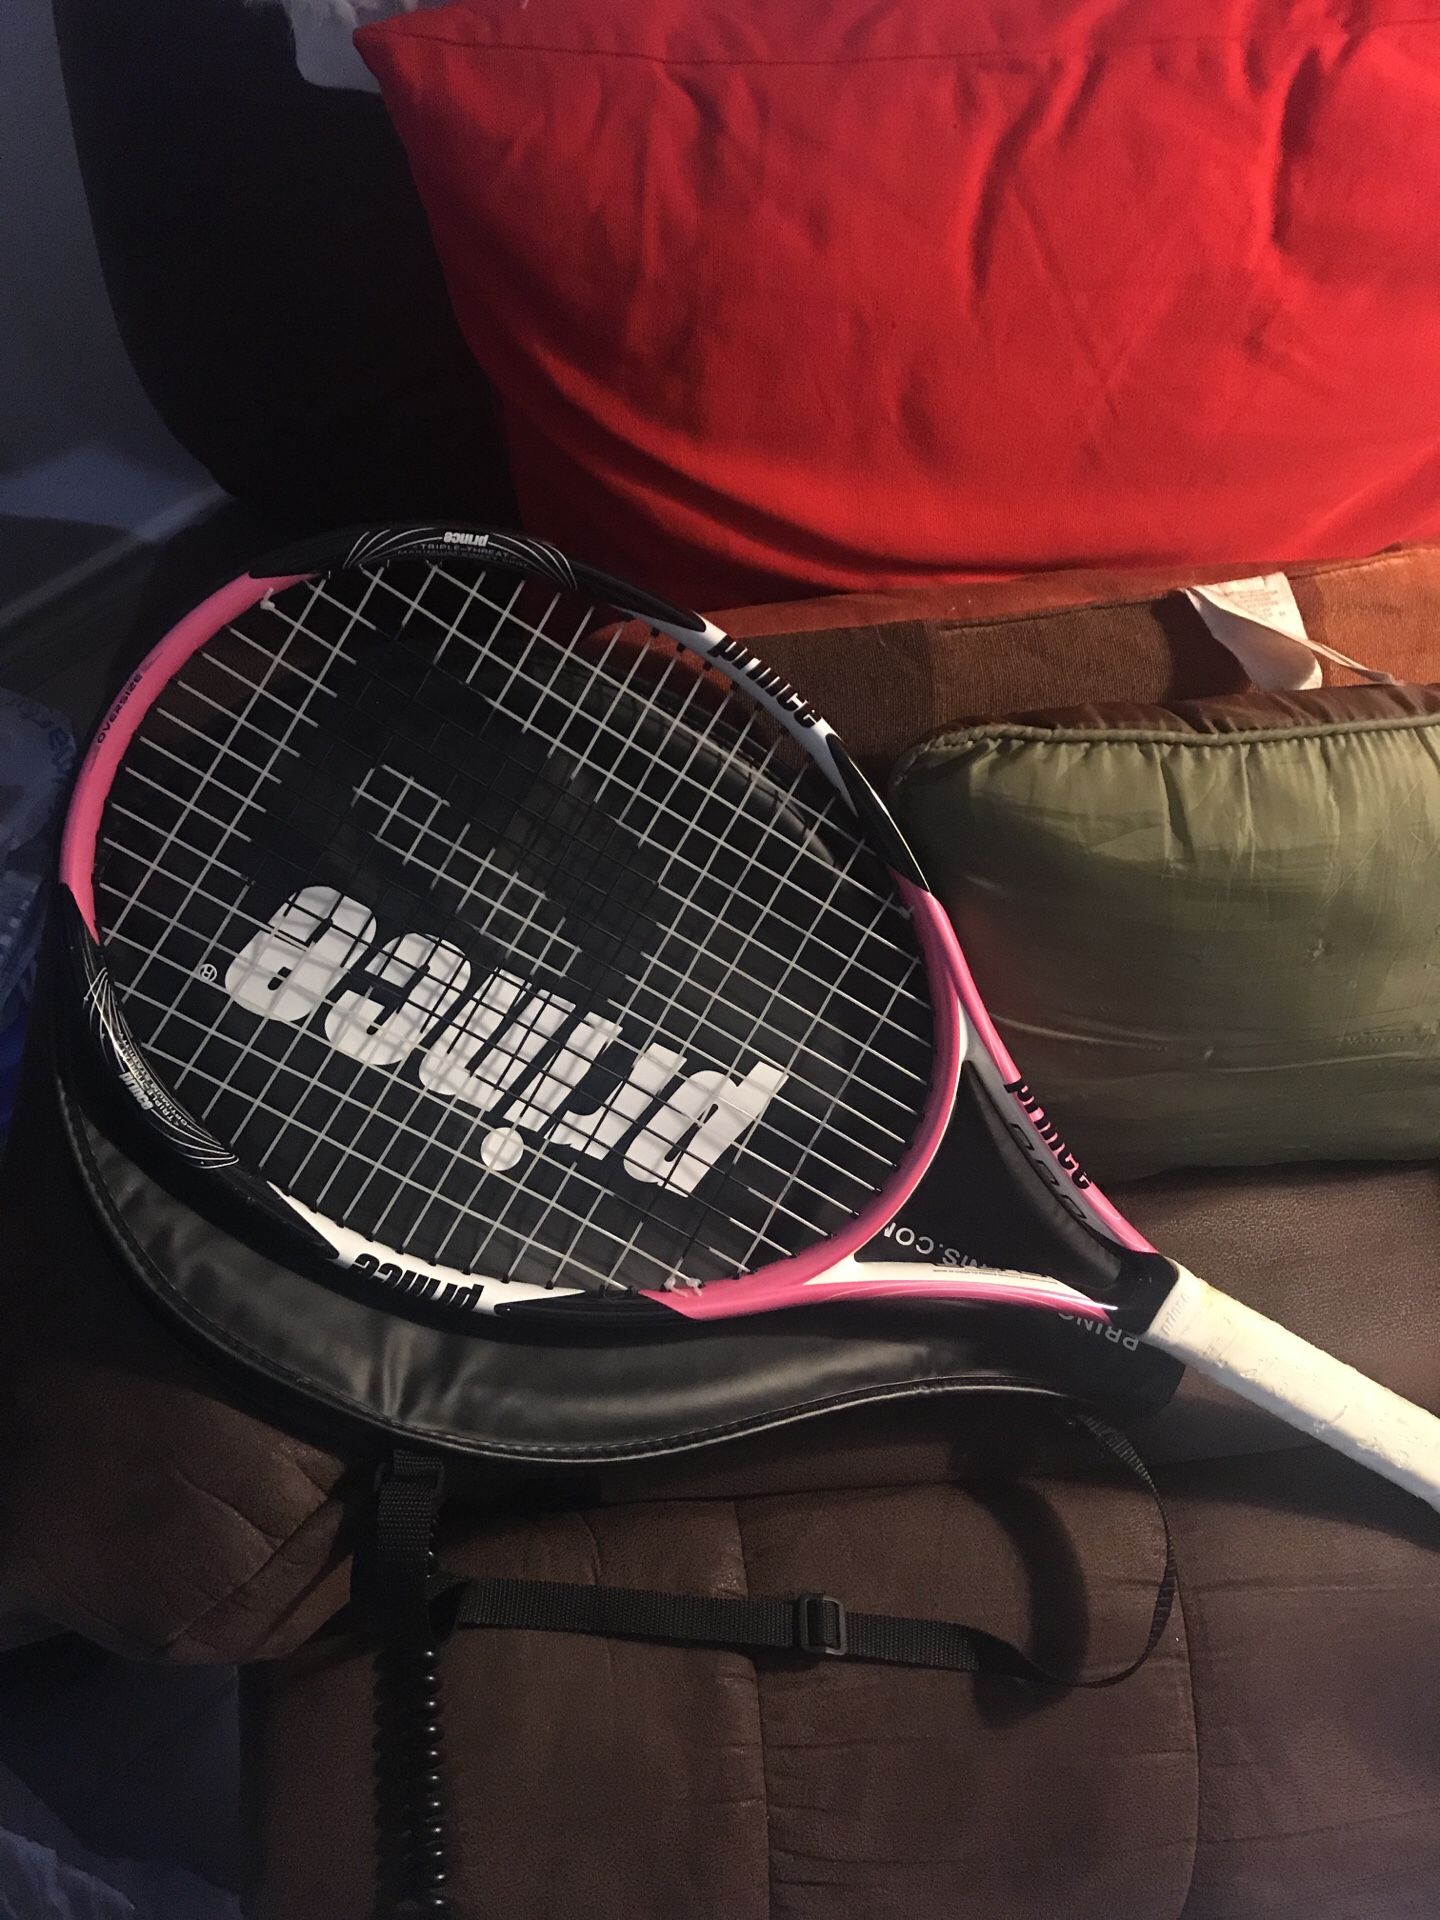 Prince tennis racket